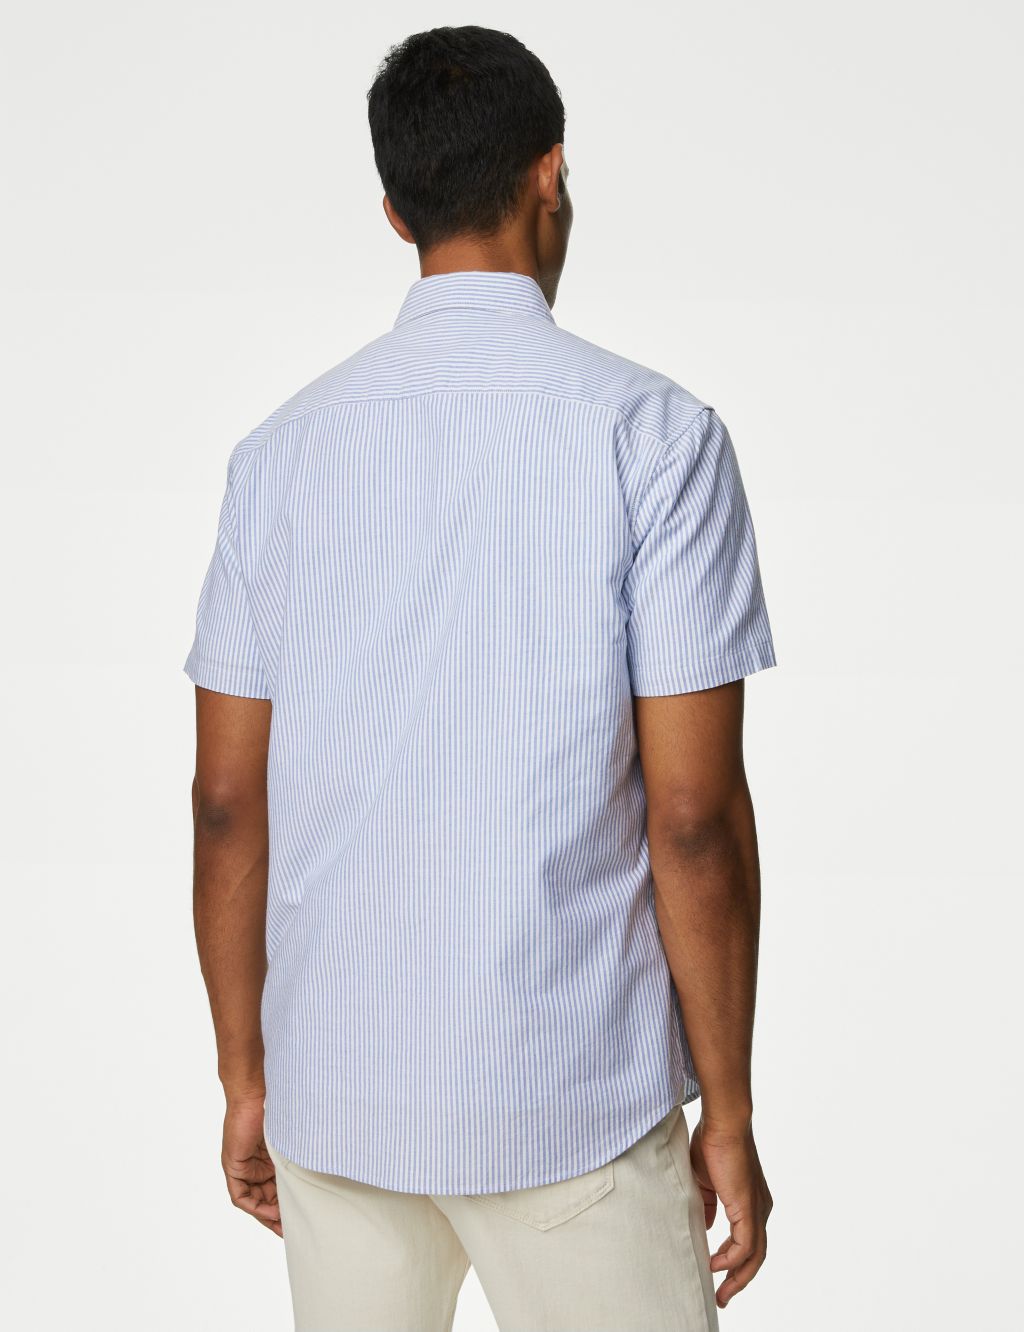 Pure Cotton Striped Oxford Shirt image 5